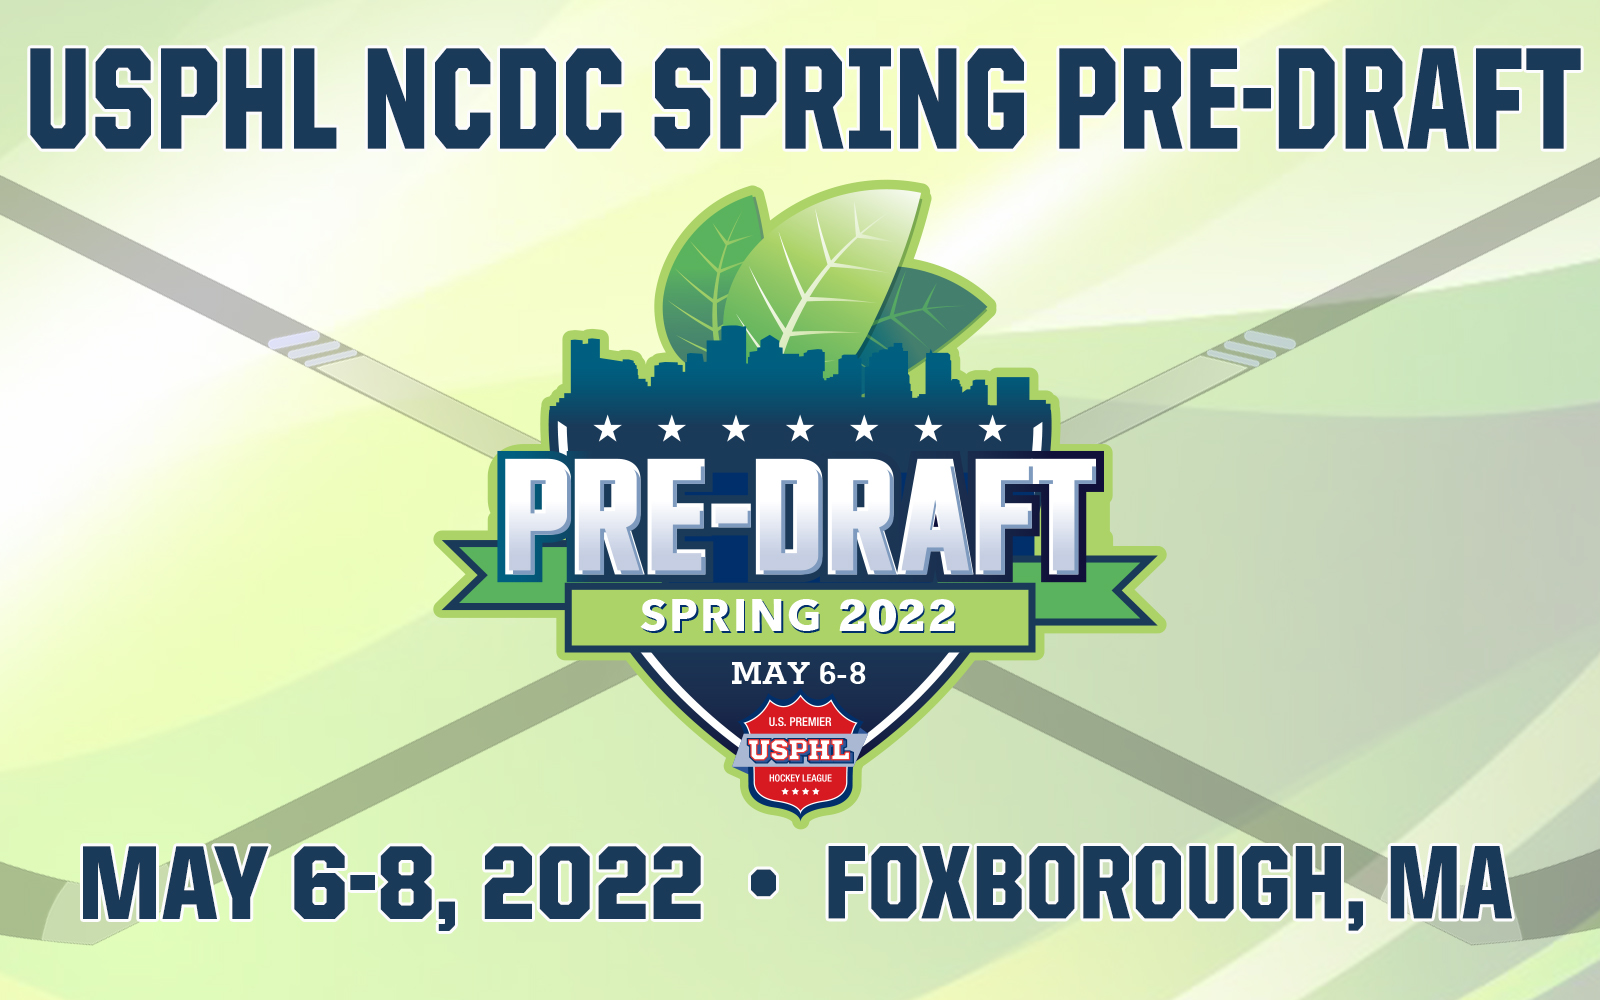 USPHL on Twitter "The 2022 USPHL NCDC Spring PreDraft Showcase will